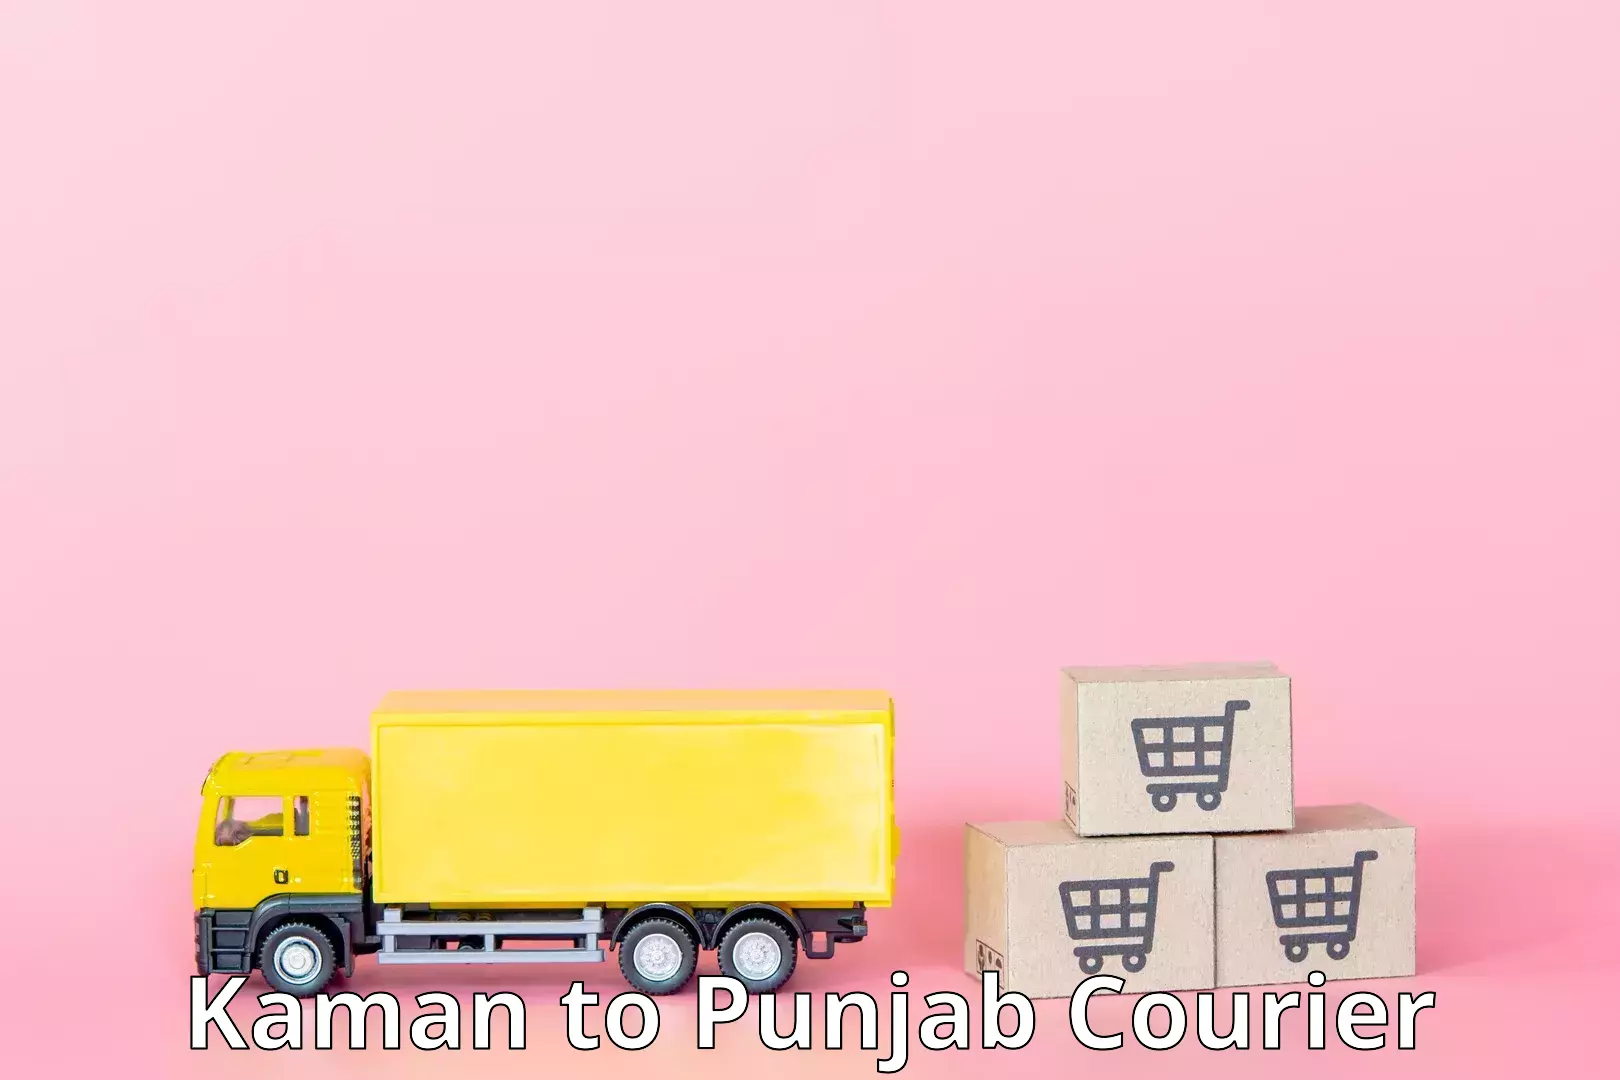 Punctual parcel services Kaman to Pathankot